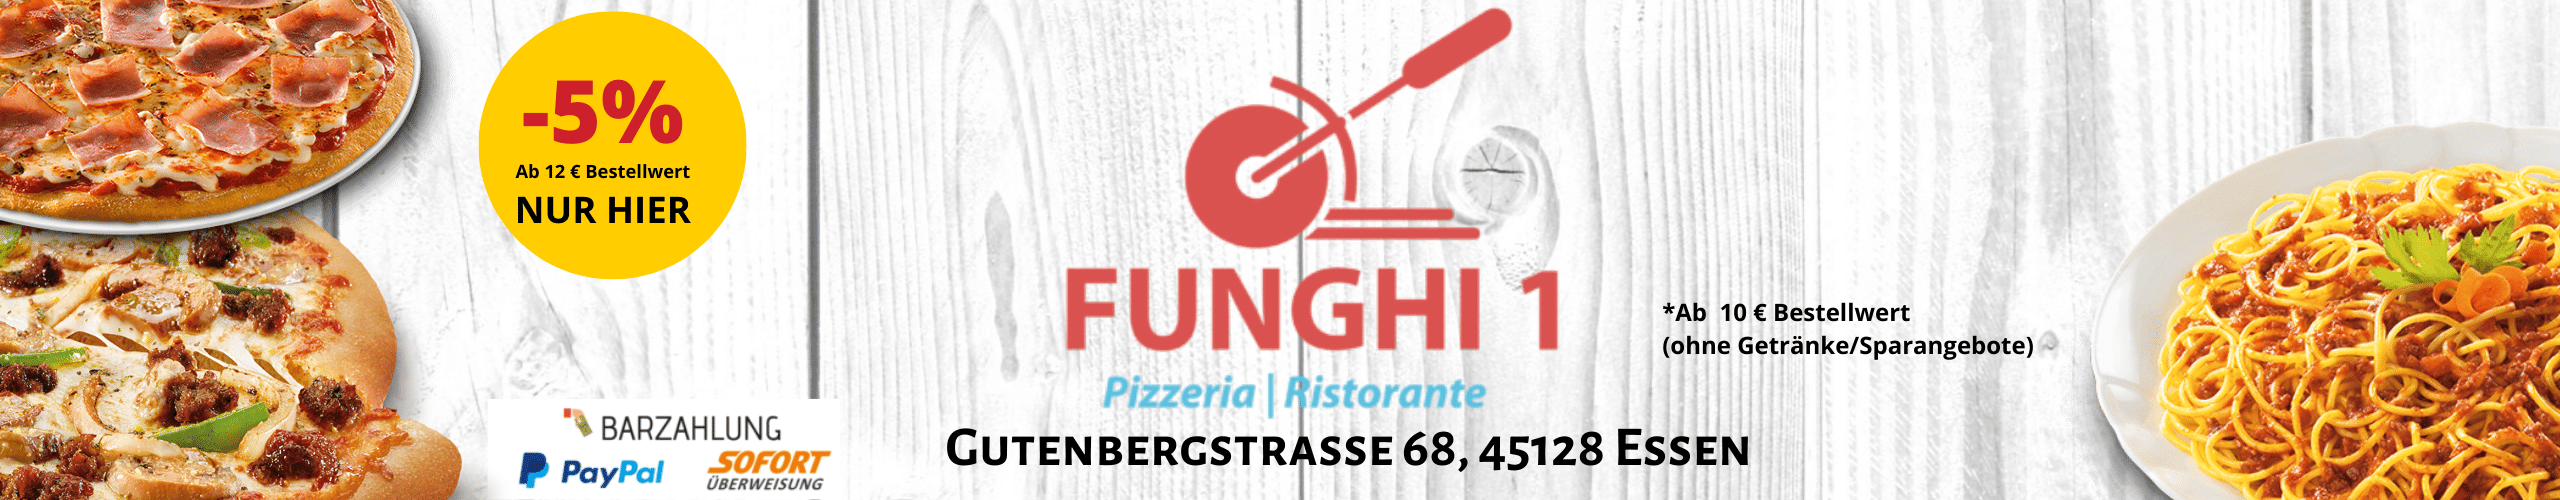 Pizzeria Funghi 1 in Essen